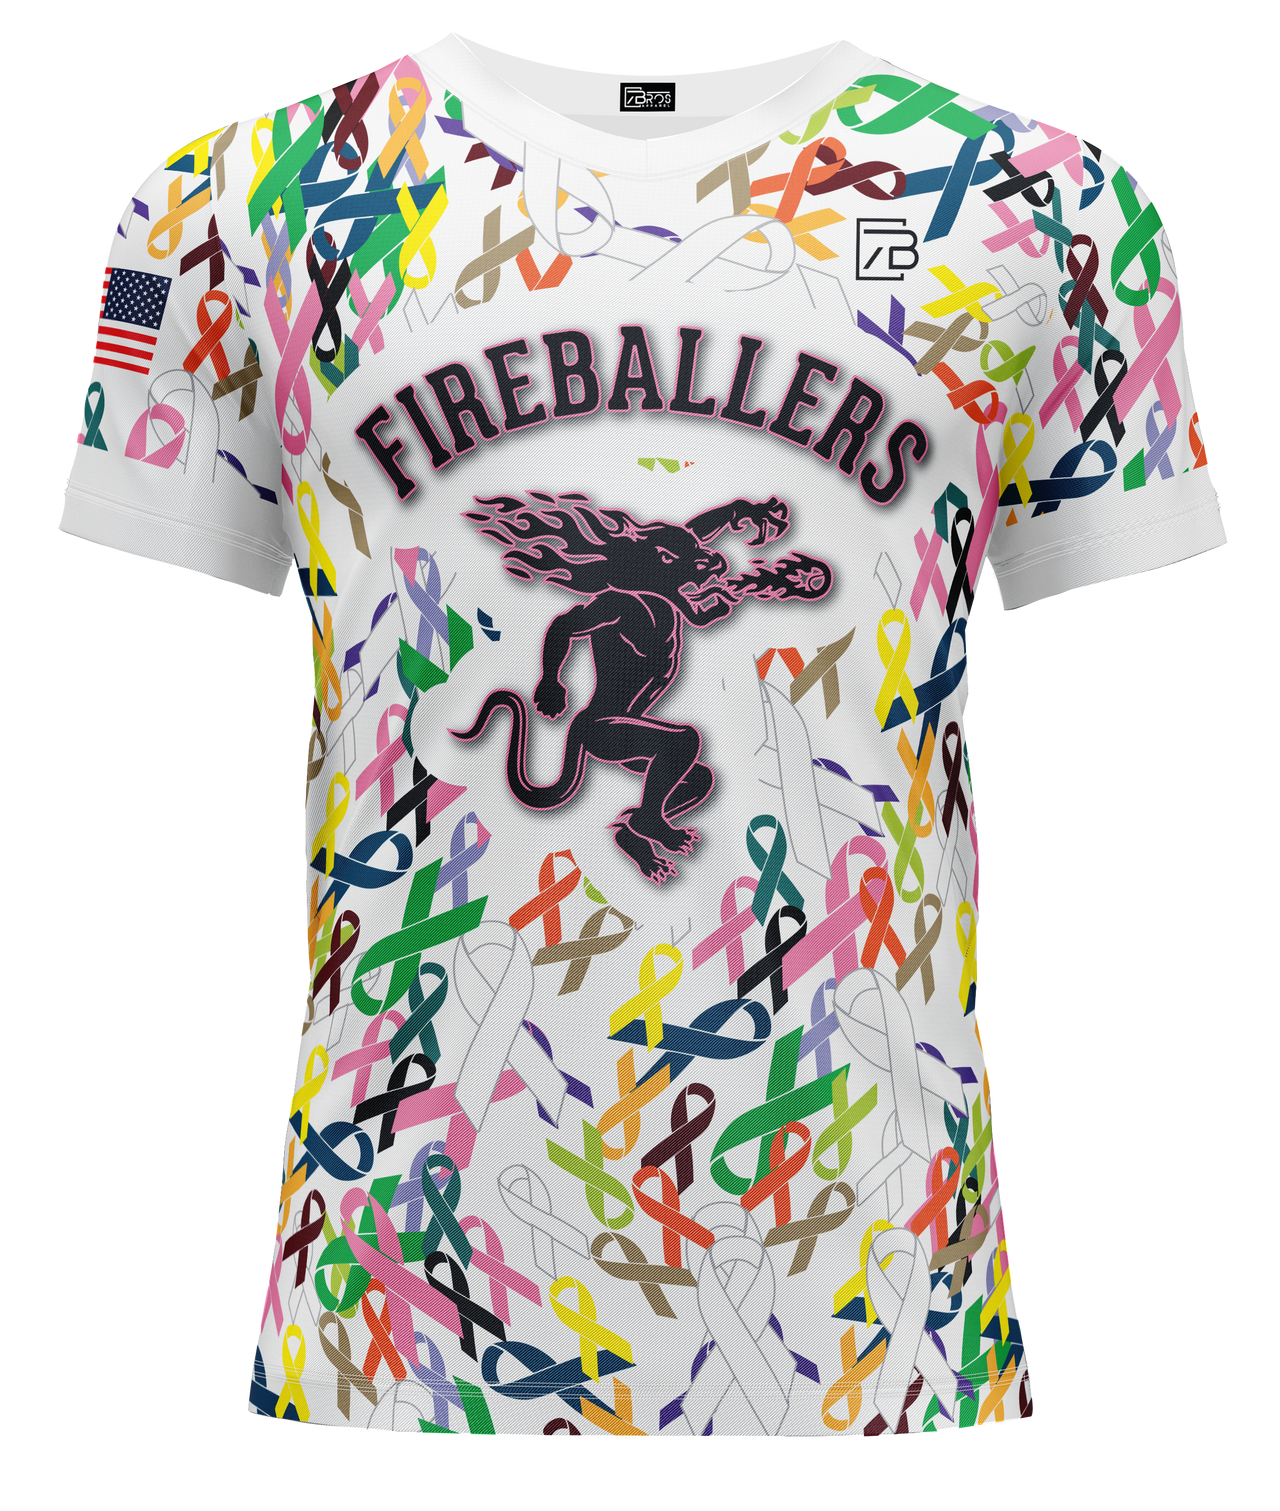 Lady Rays Custom Breast Cancer Baseball Jerseys - Custom Softball Jerseys  .com - The World's #1 Choice for Custom Softball Uniforms